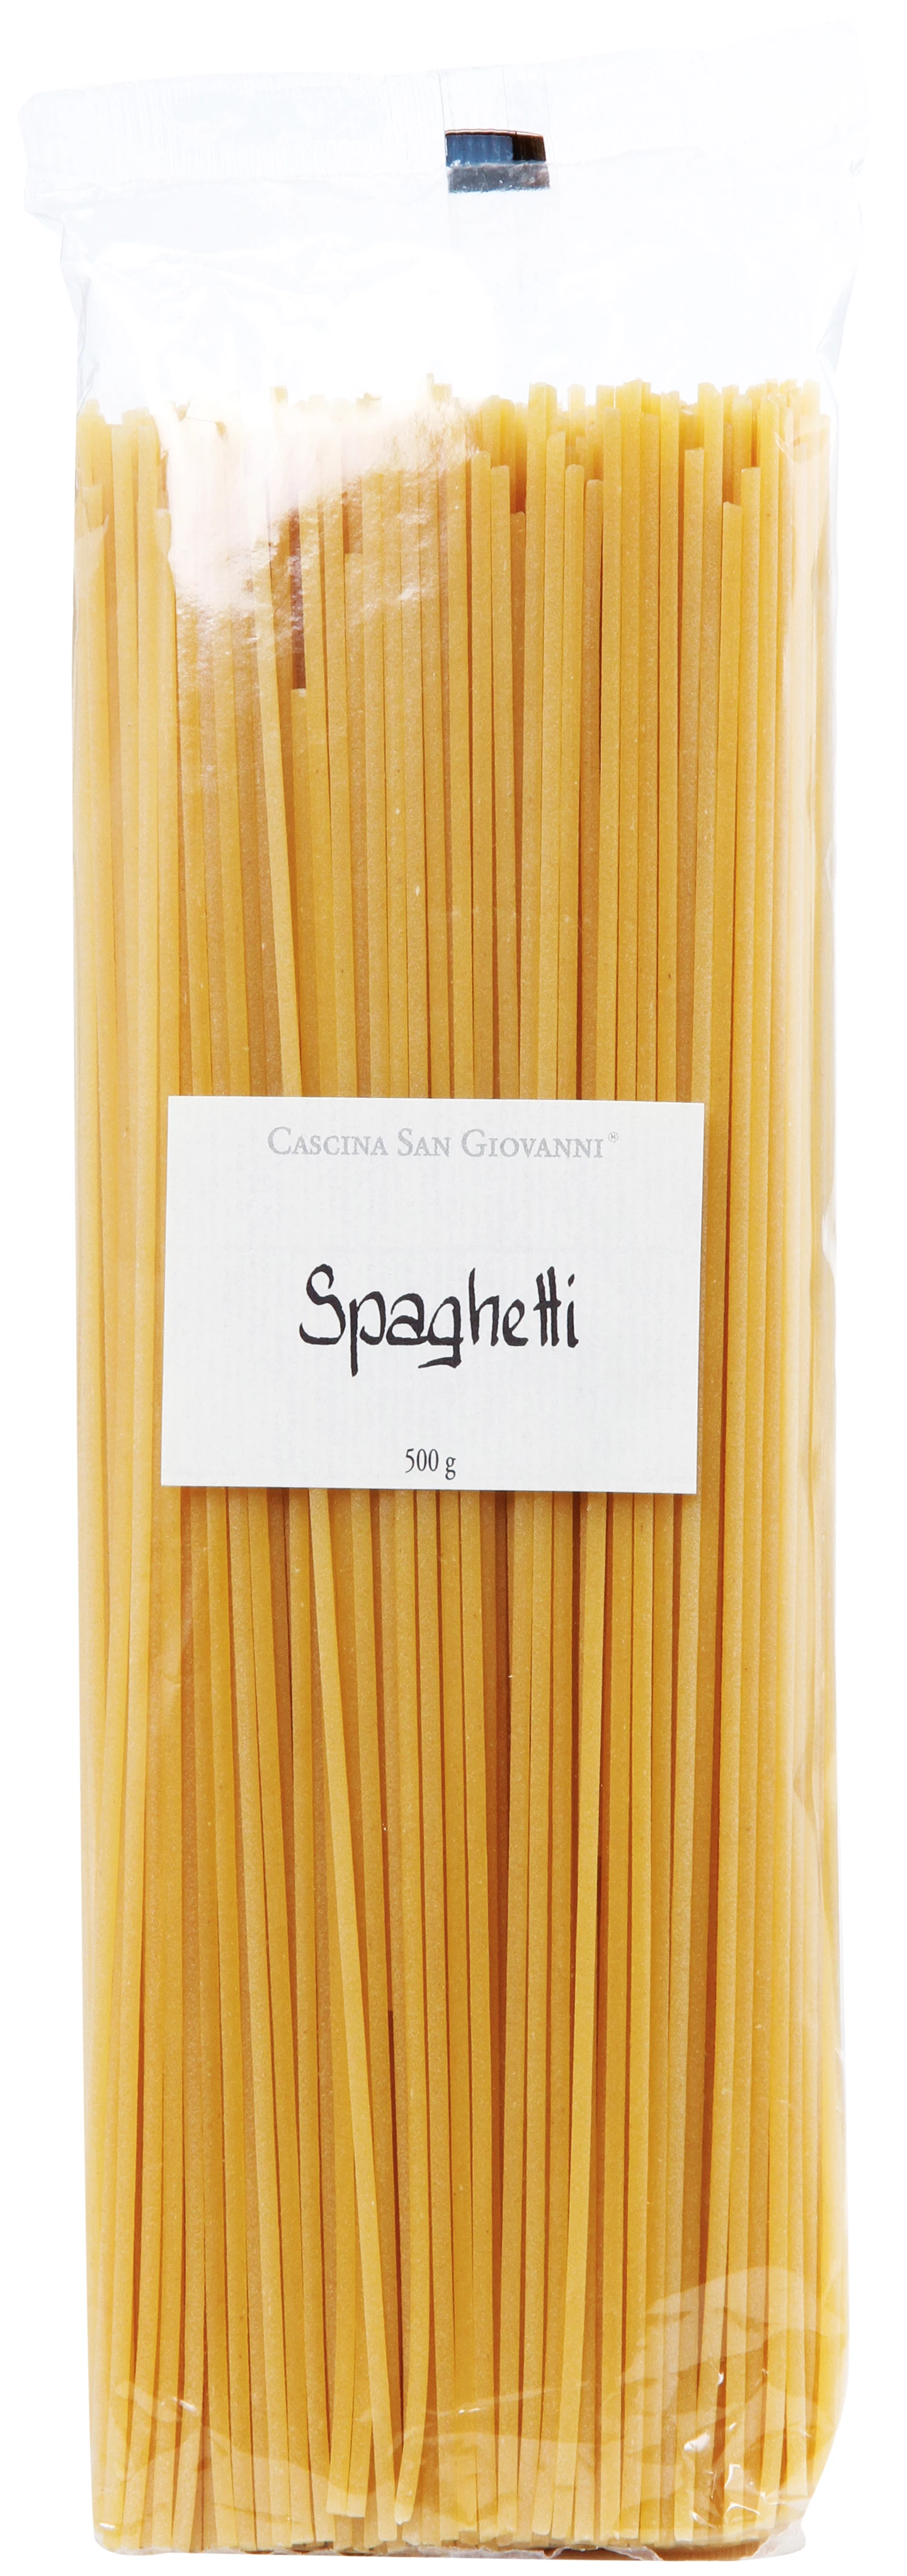 Løgismose Delikatesser Cascina San Giovanni Spaghetti 500g - 127966